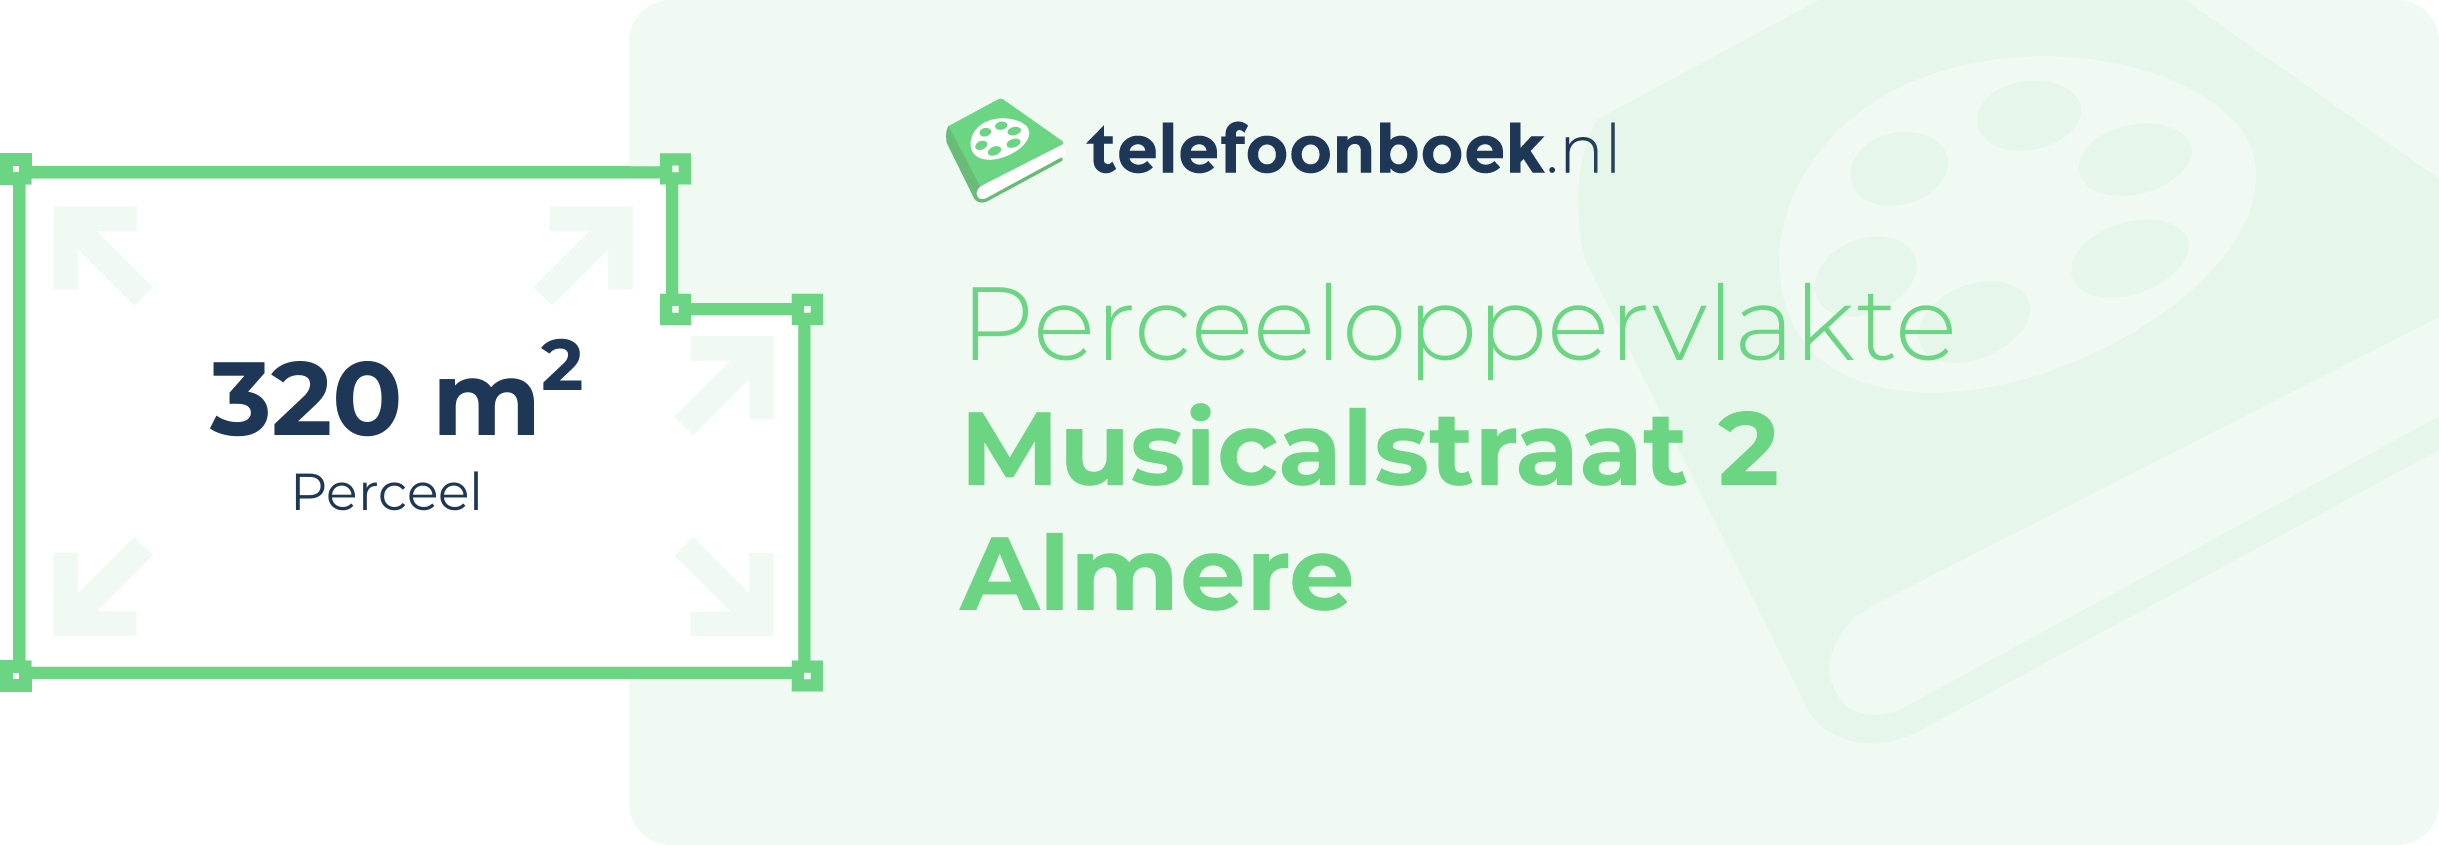 Perceeloppervlakte Musicalstraat 2 Almere